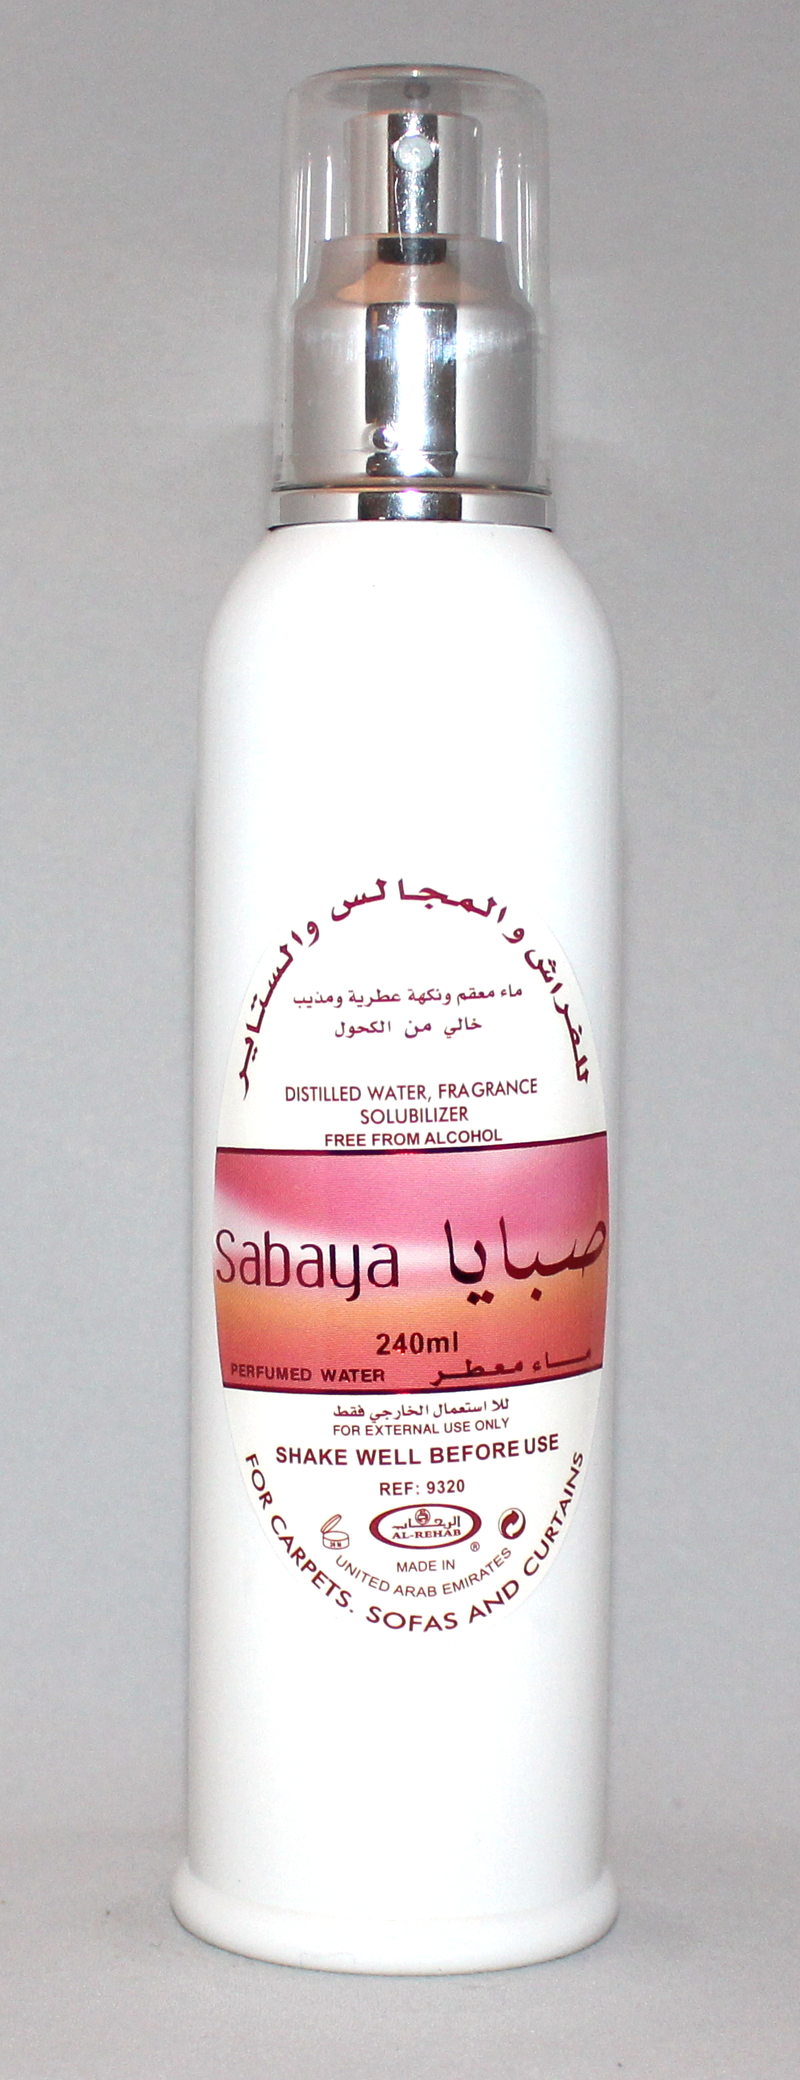 Sabaya  Room Freshener by Al-Rehab (240 ml)